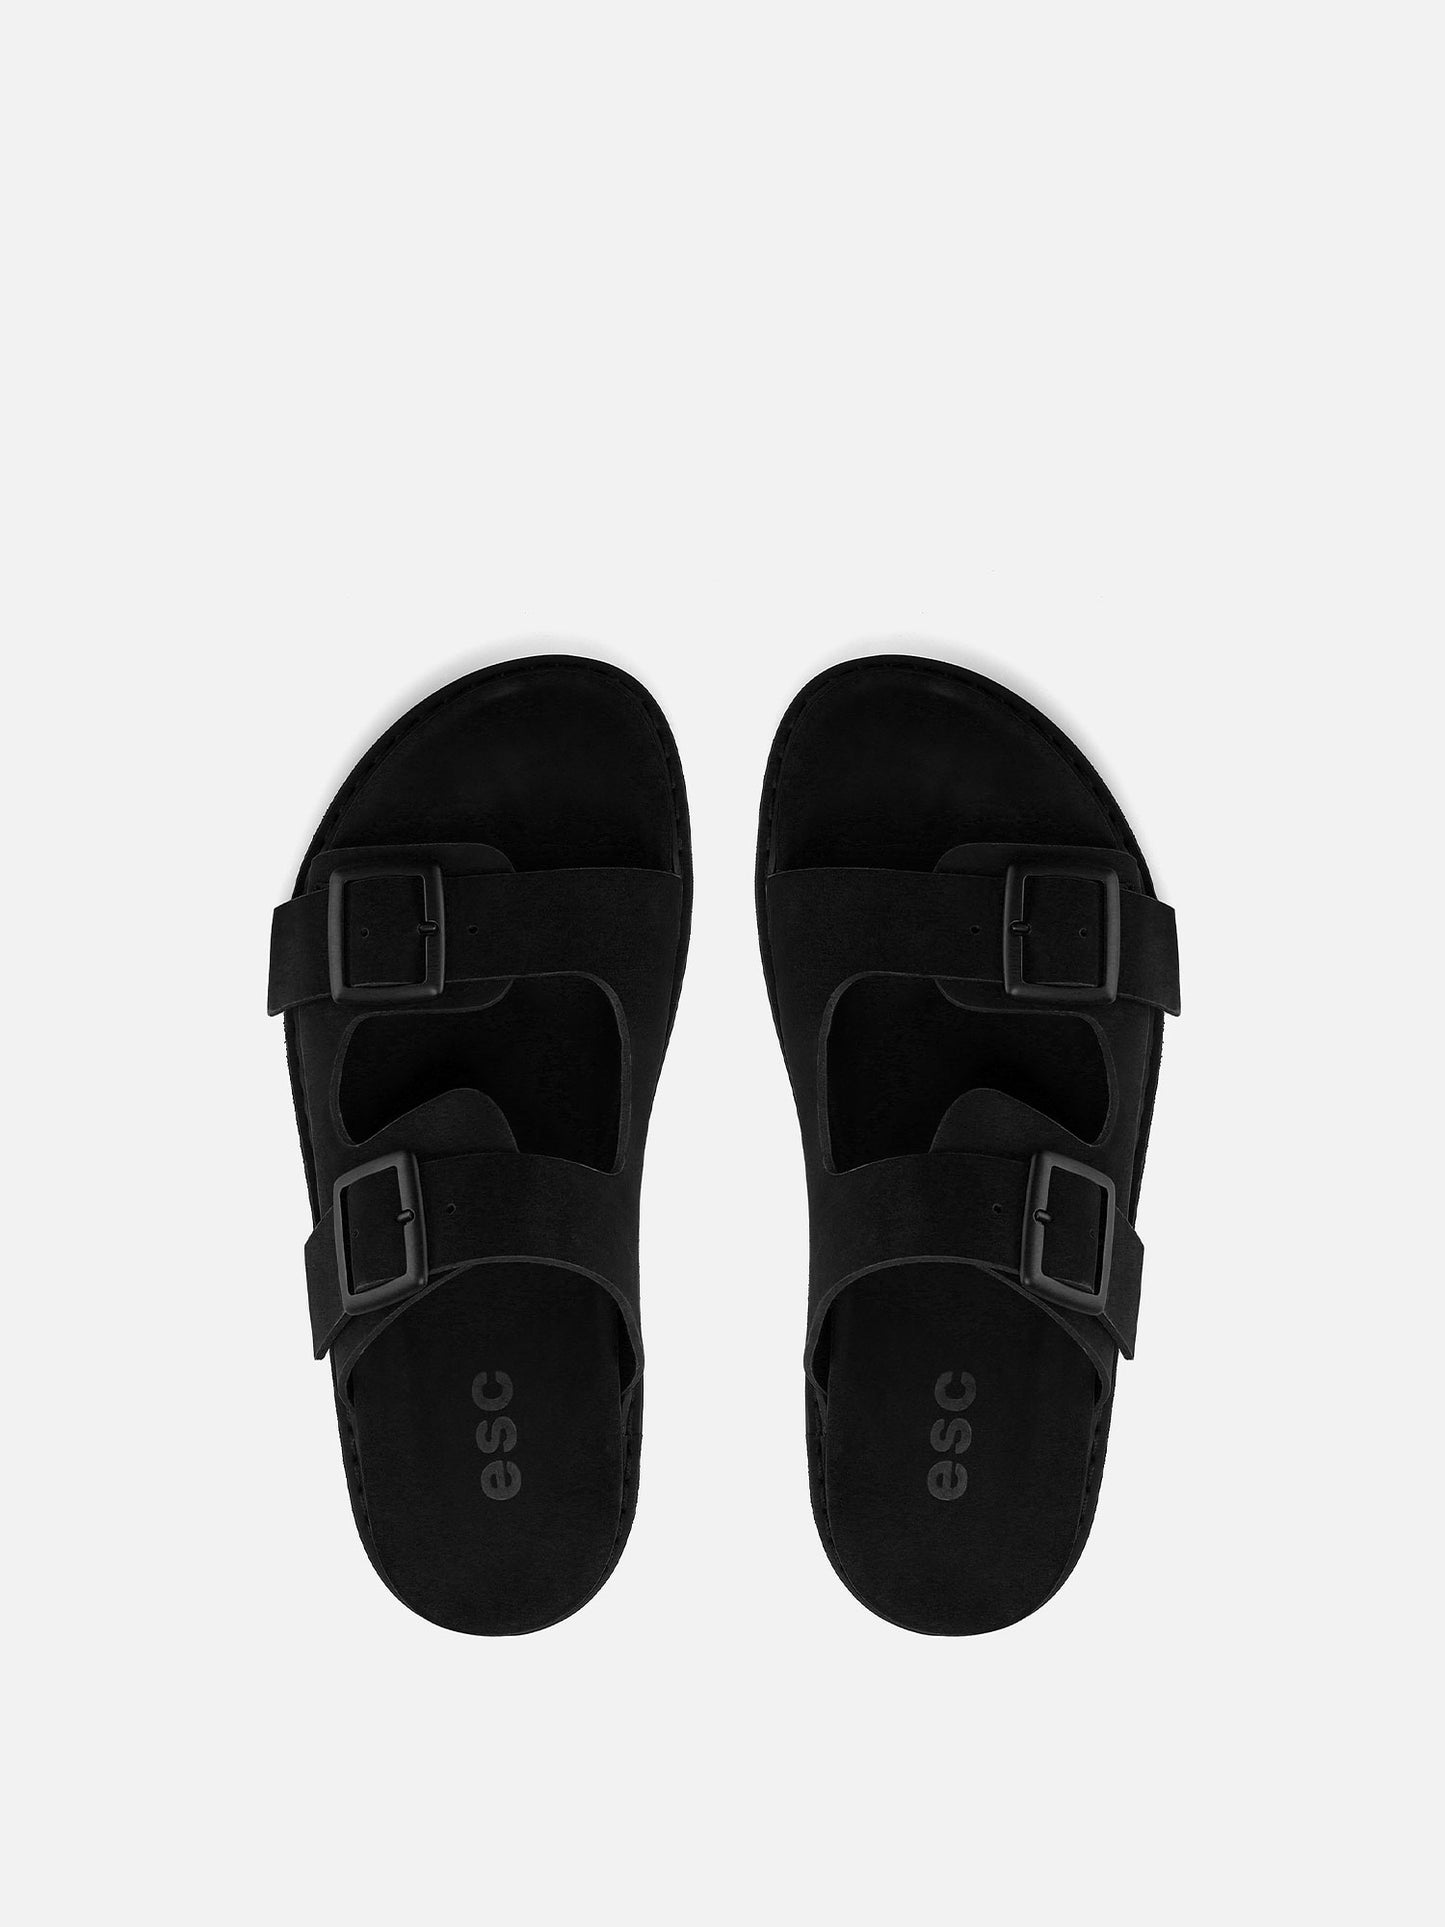 CARIBE Leather Sandals - Black